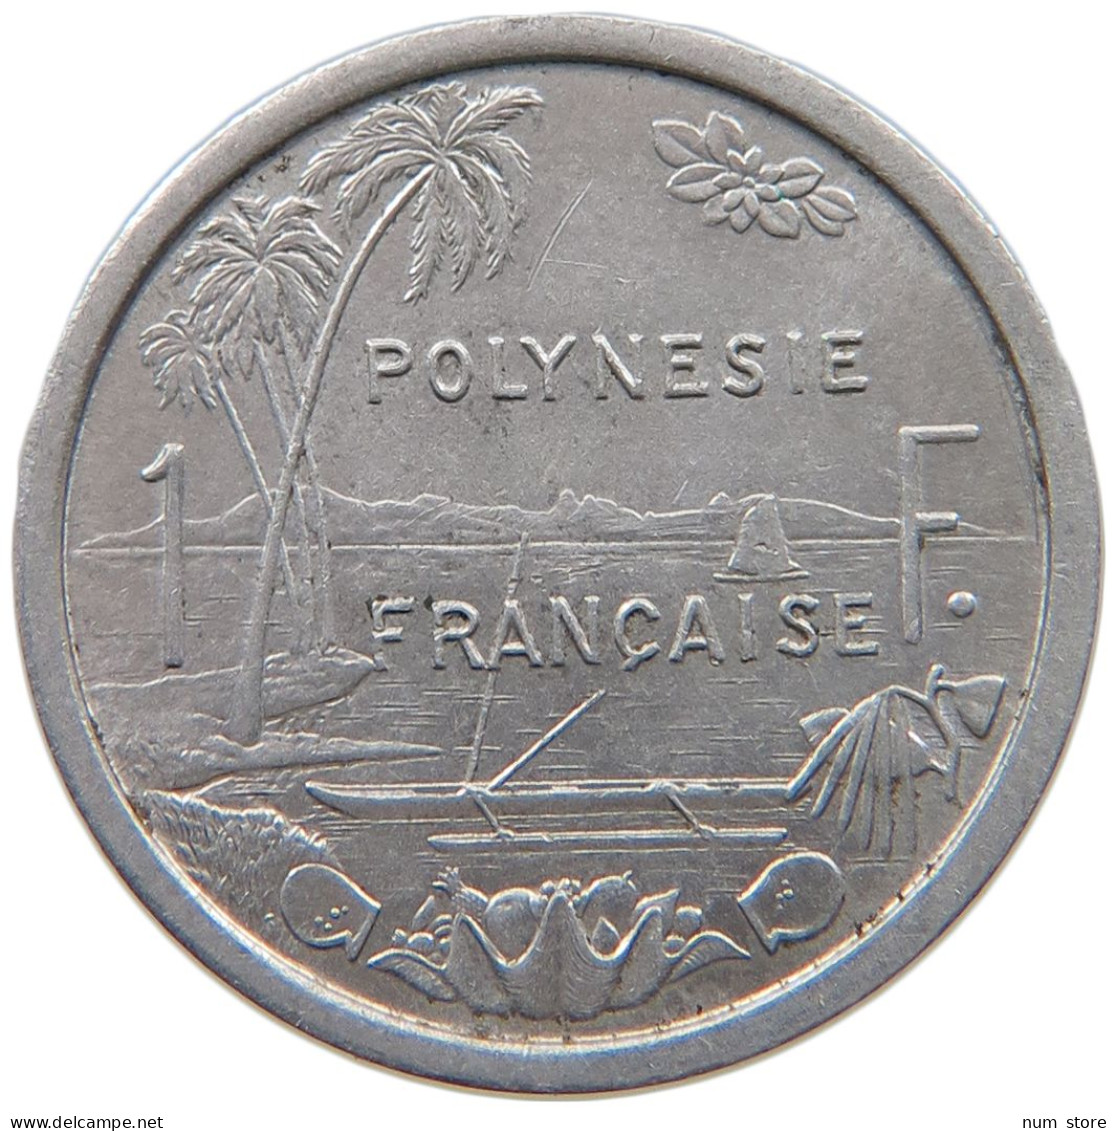 POLYNESIA FRANC 1965  #a051 0341 - Französisch-Polynesien